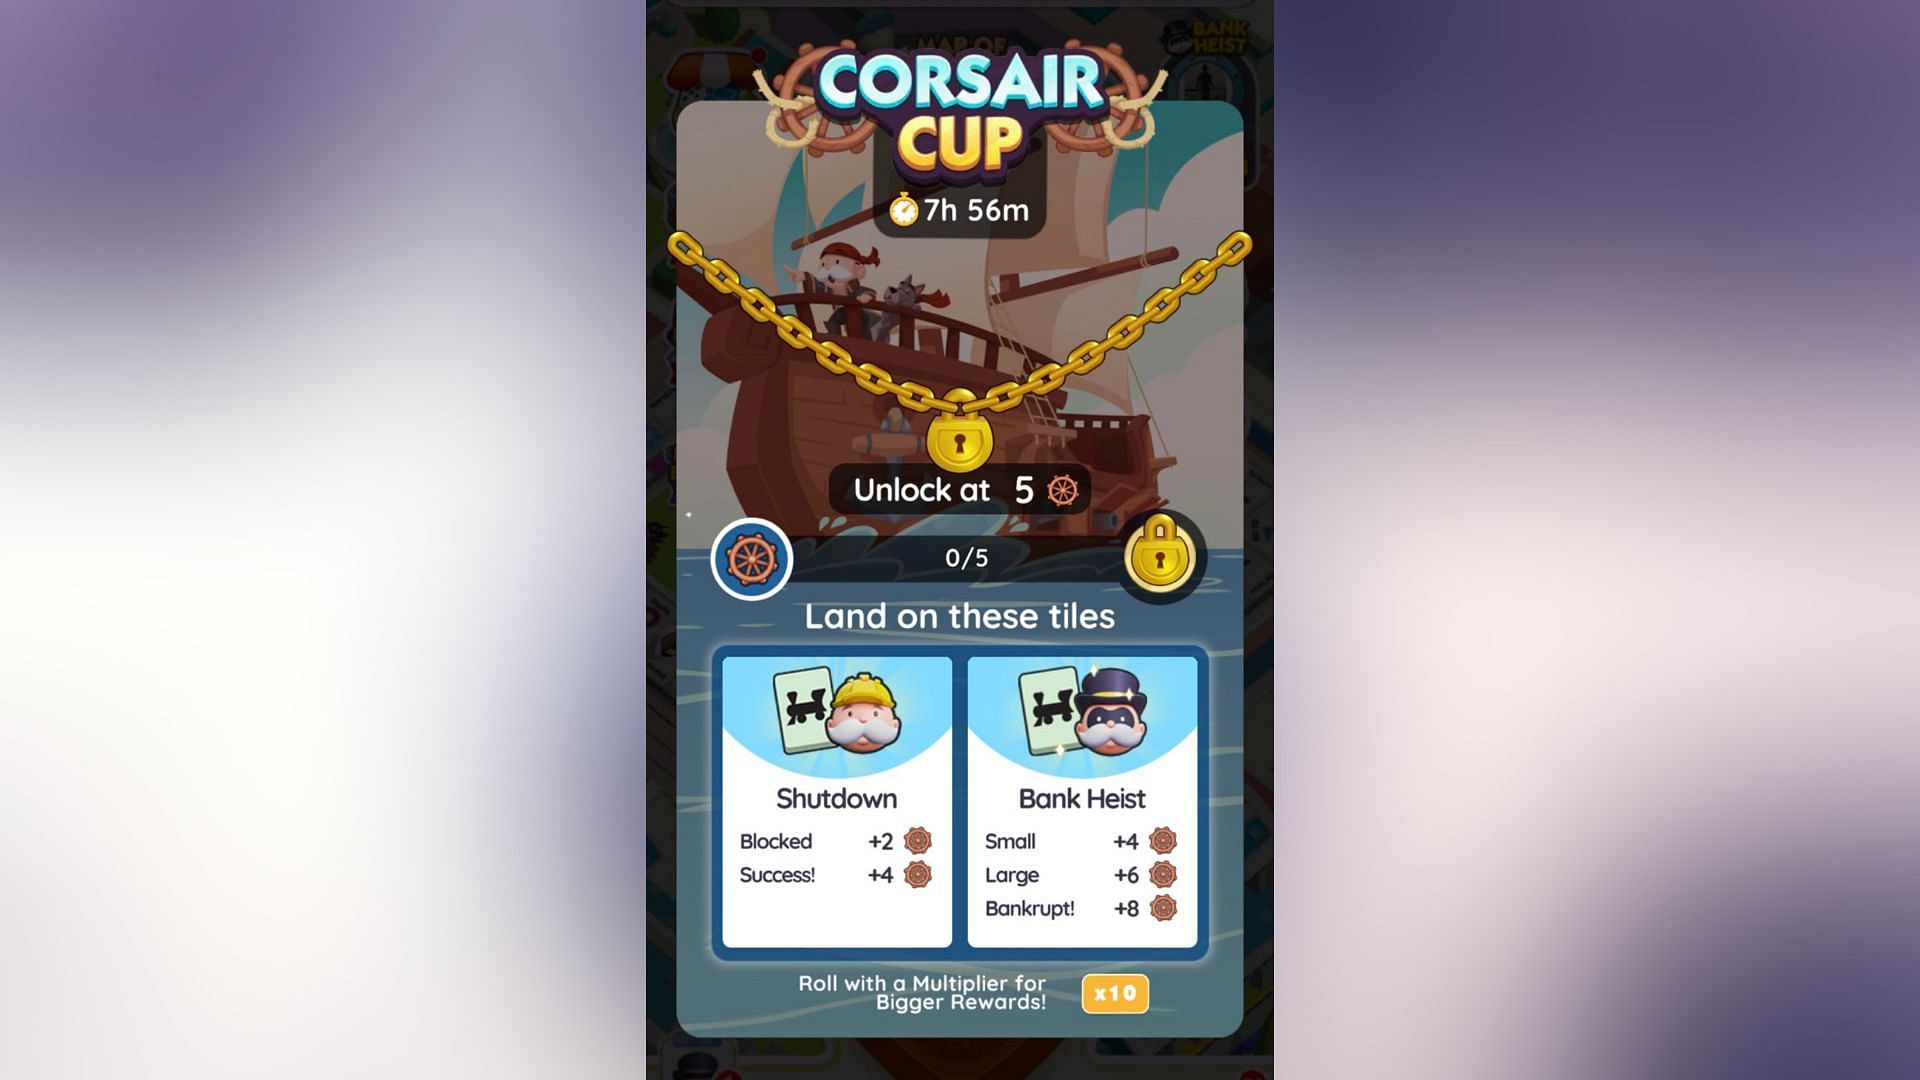 Monopoly Go Corsair Cup scoring system (Image via Scopely)